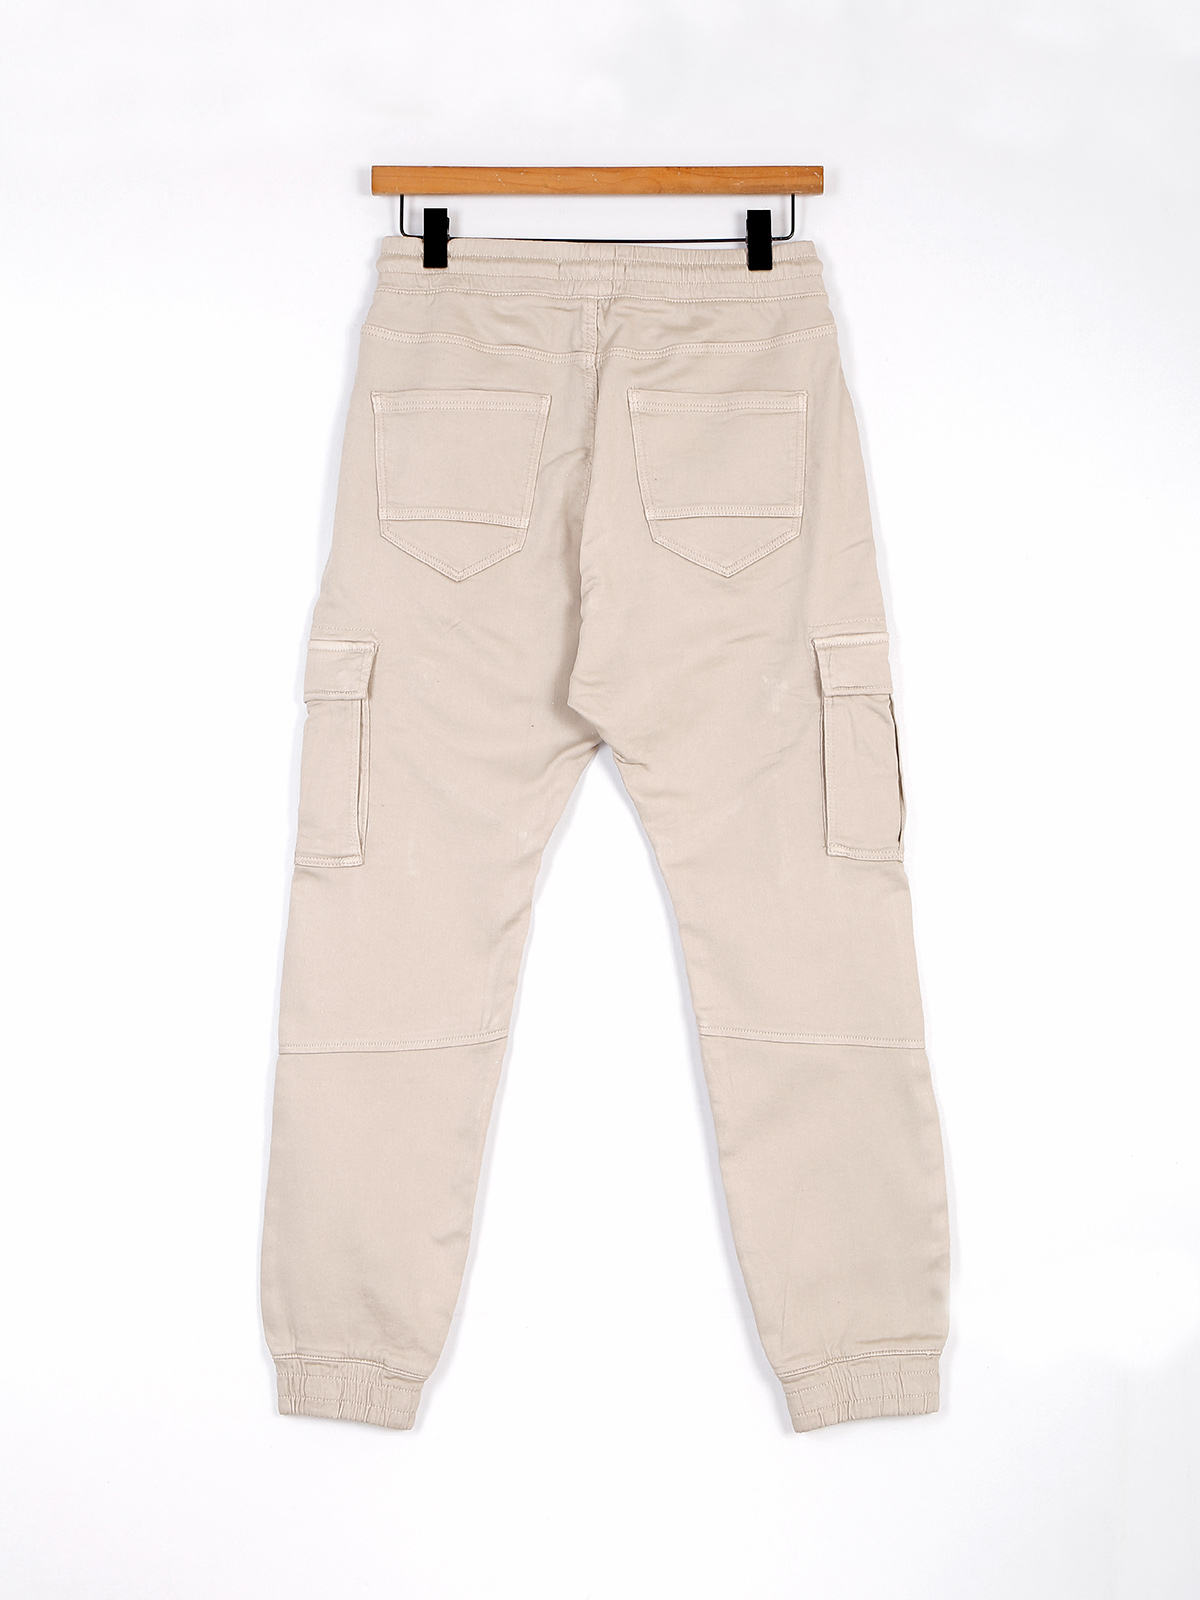 Buy Blue Trousers & Pants for Men by Celio Online | Ajio.com